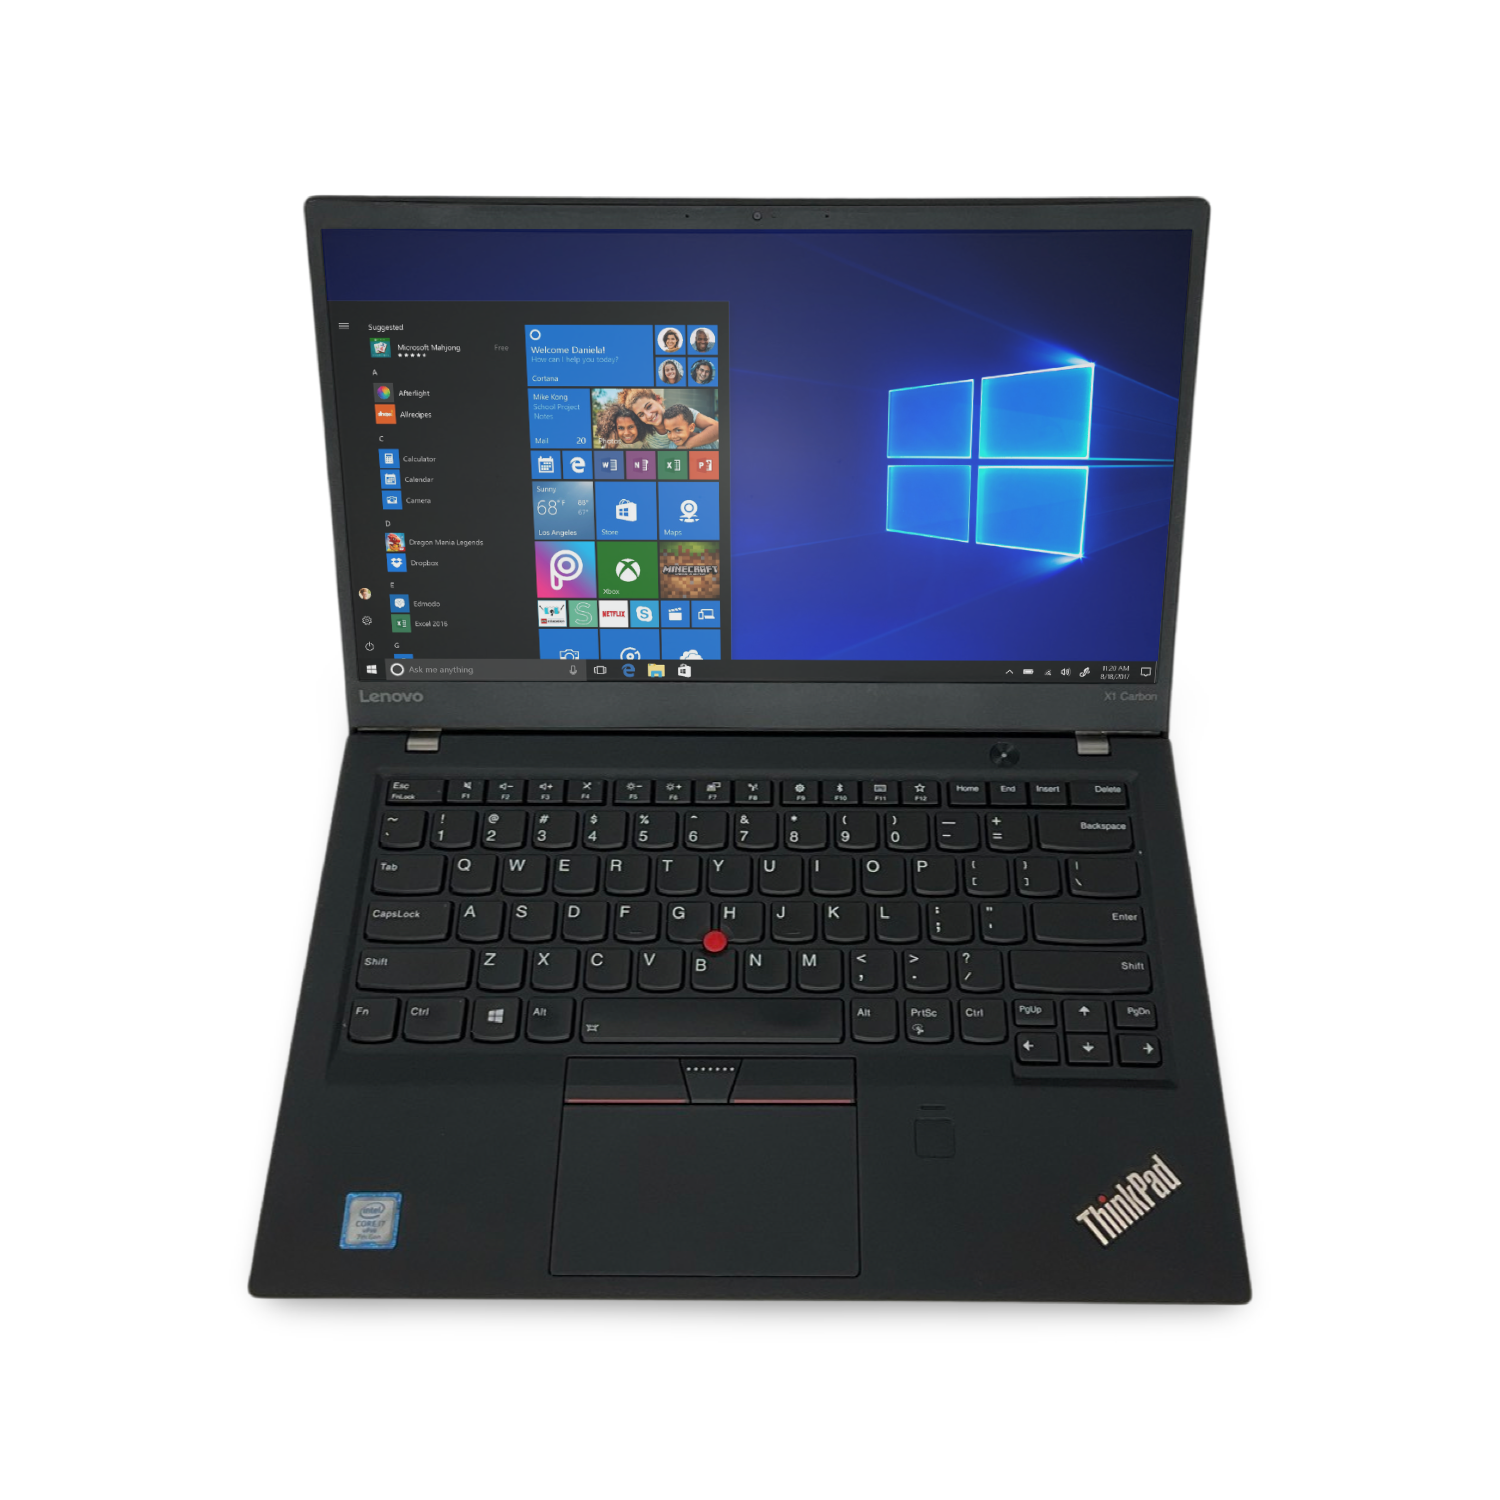 Lenovo ThinkPad X1 Carbon 5th Gen 14" FHD i7-7600U 16GB RAM 512GB SSD HD 620 Windows 10 Pro